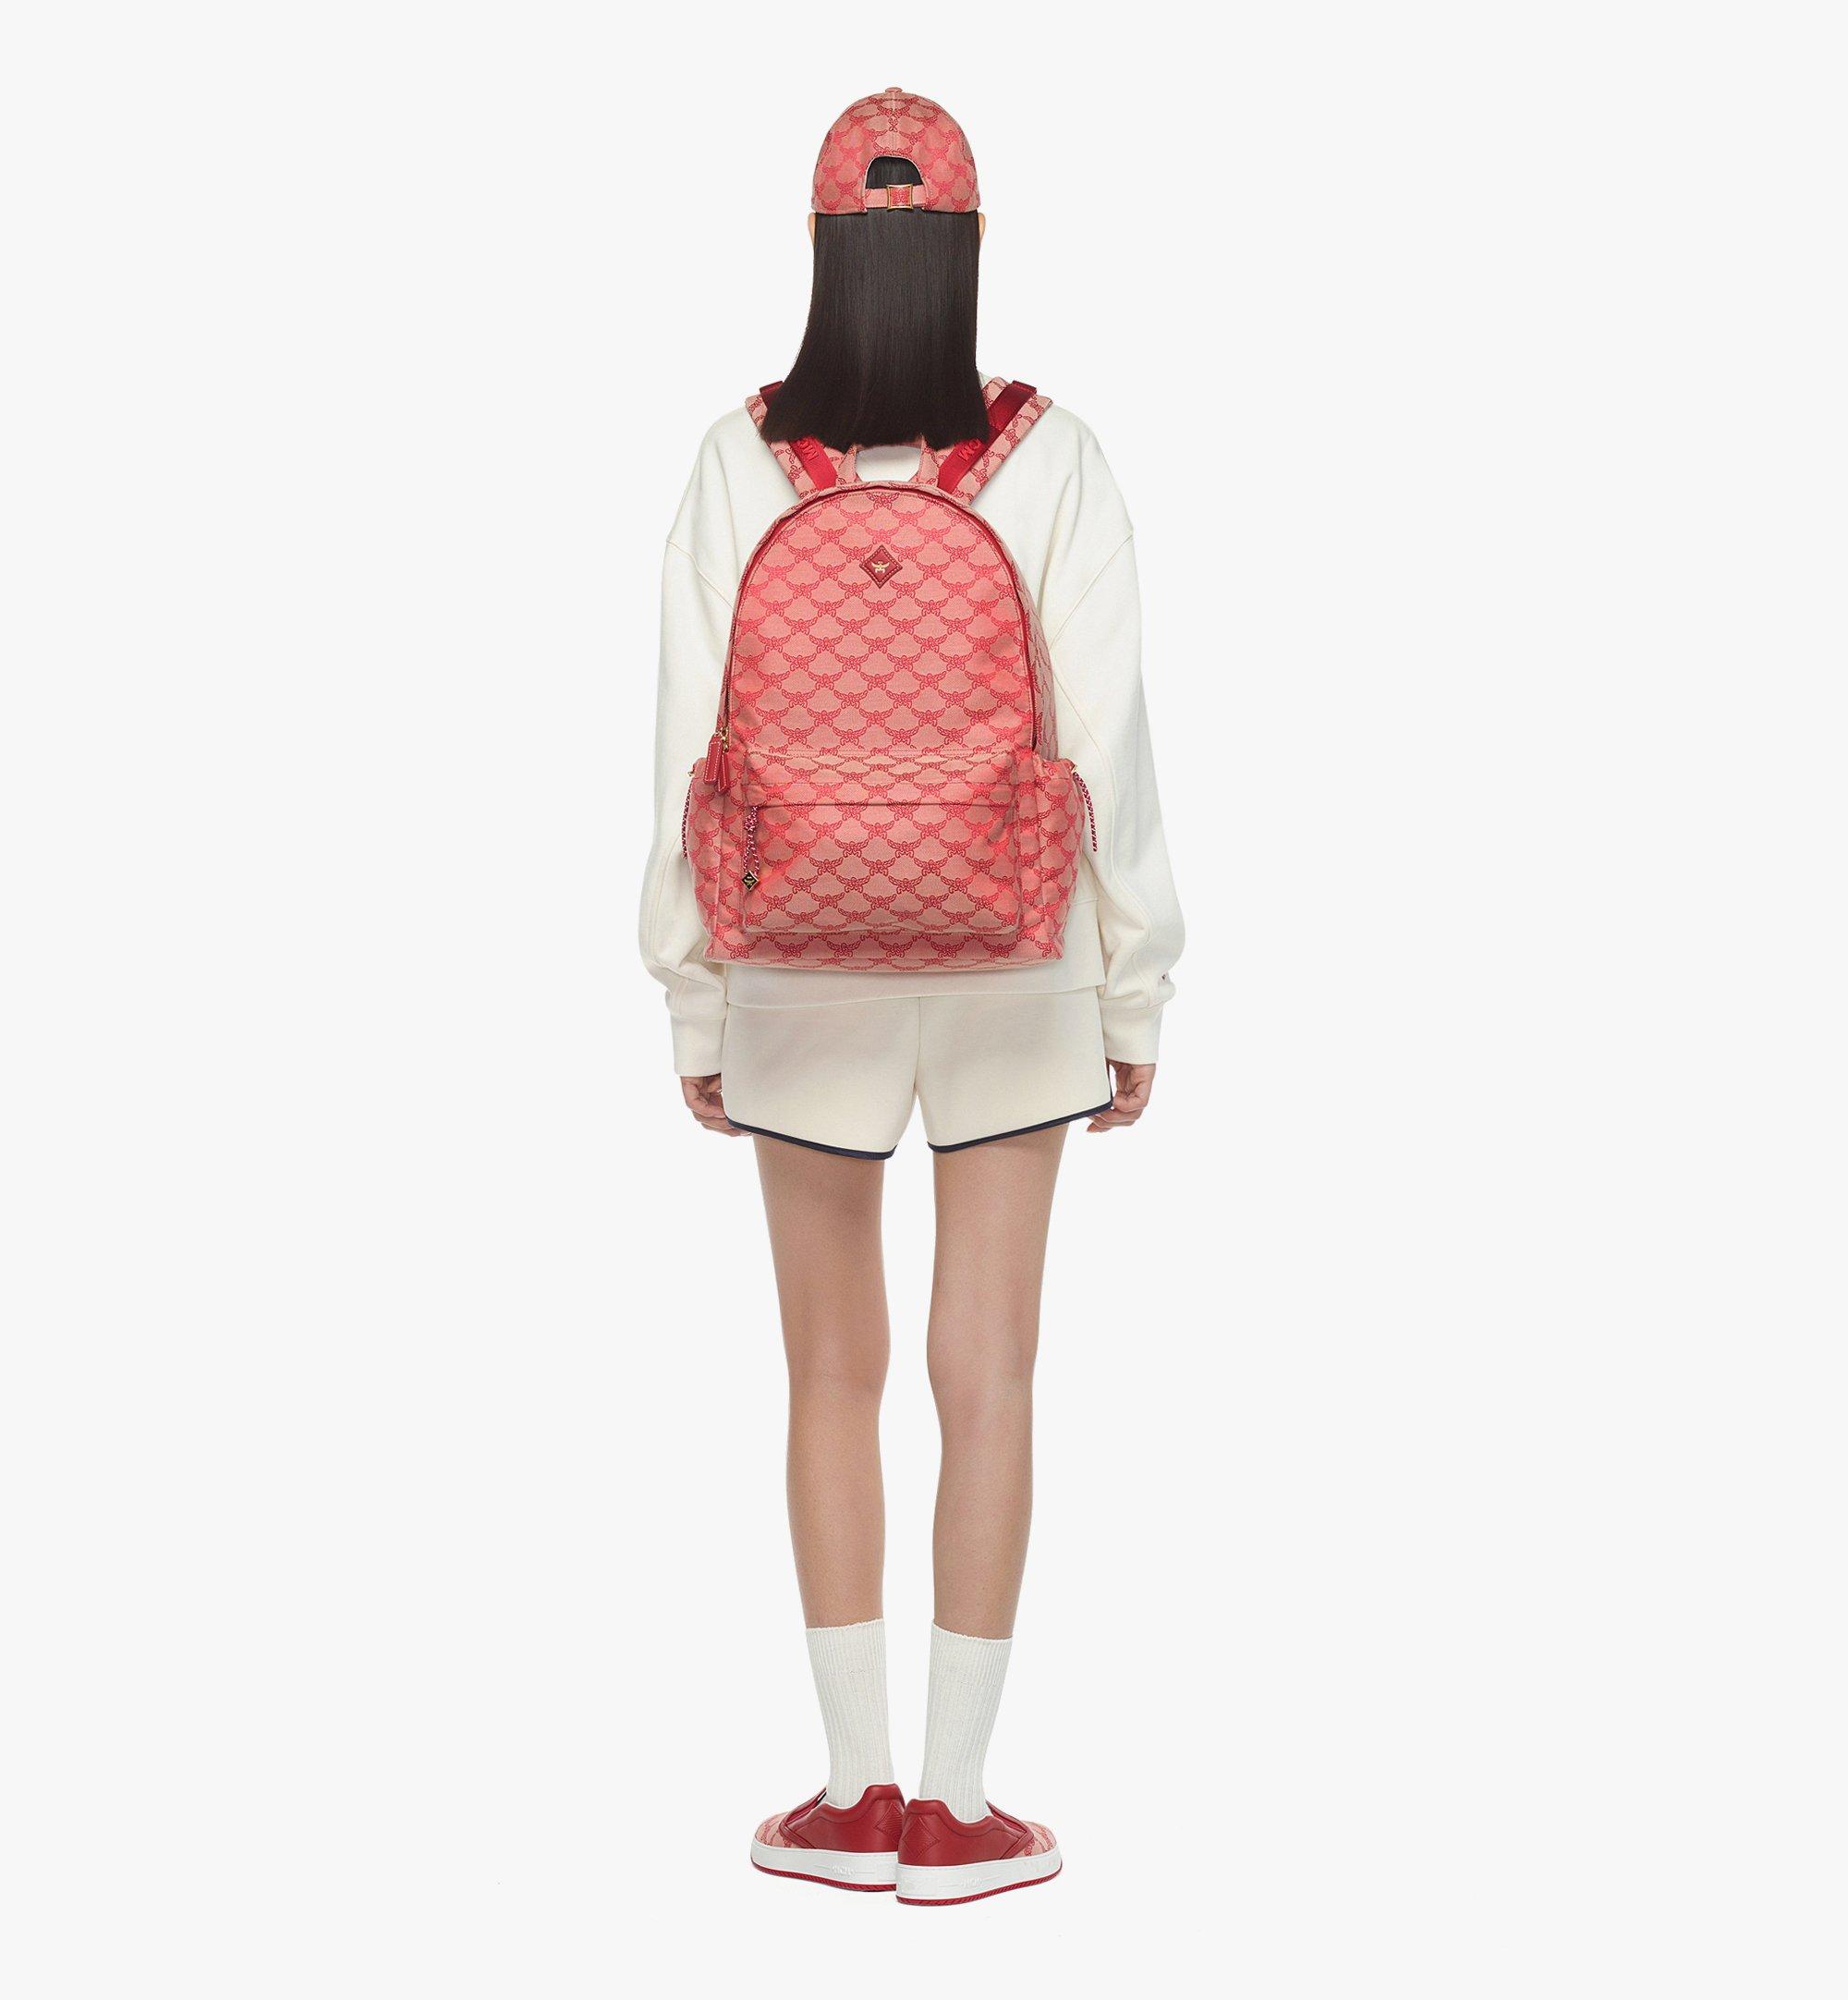 Medium Himmel Backpack in Lauretos Jacquard Red | MCM ®US